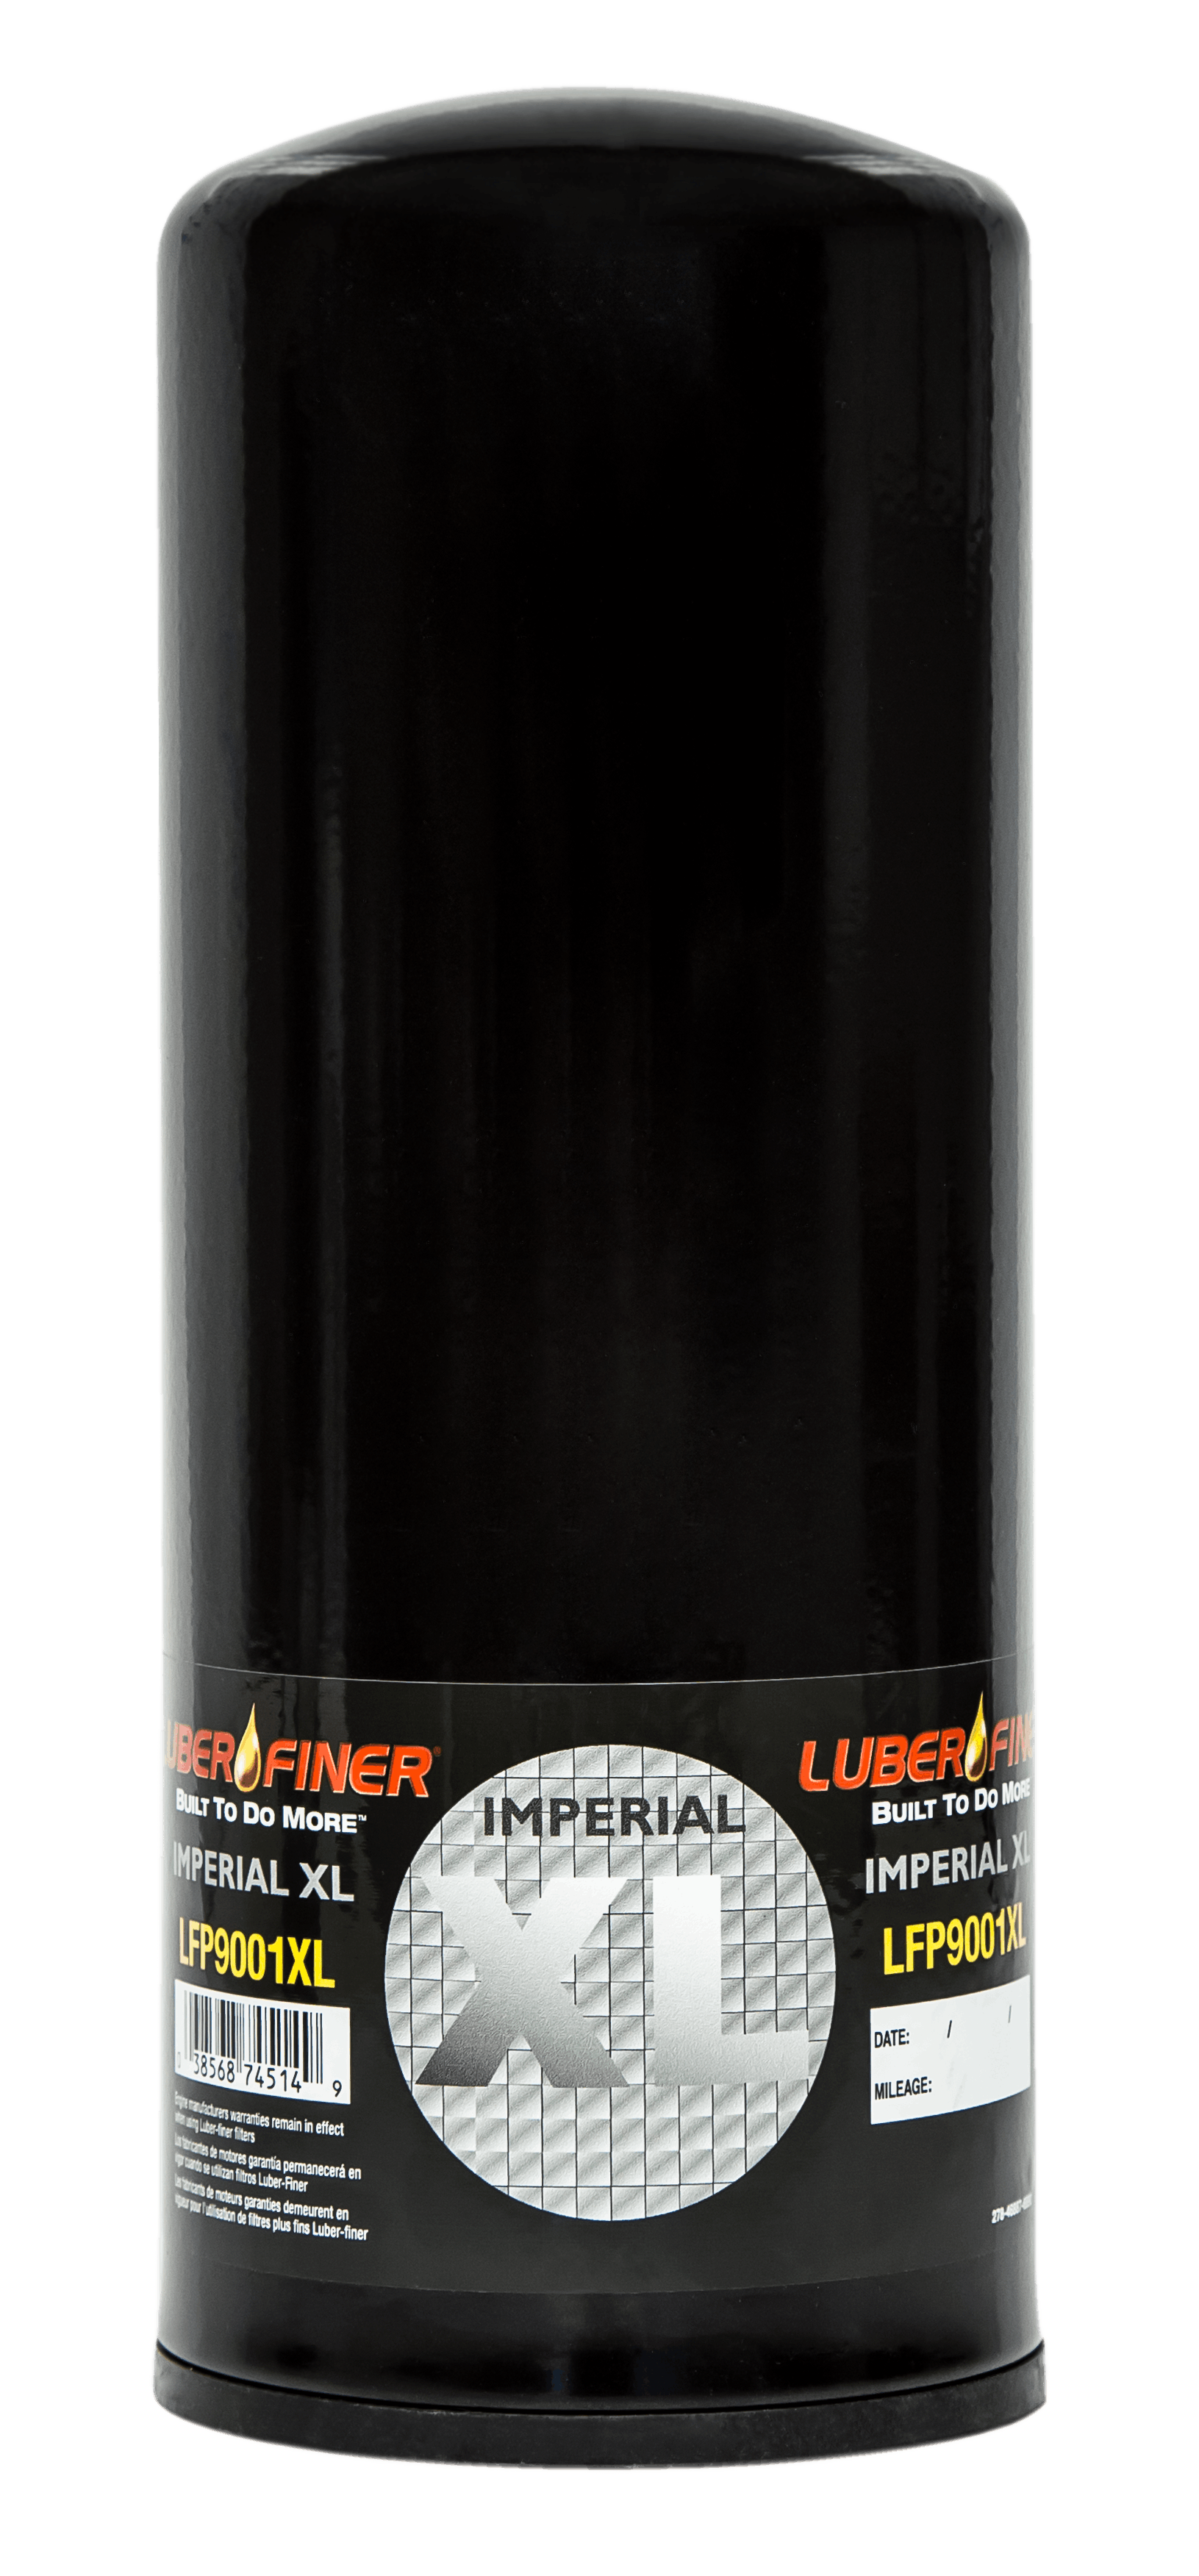 Luber-finer LP161 Heavy Duty Oil Filter 